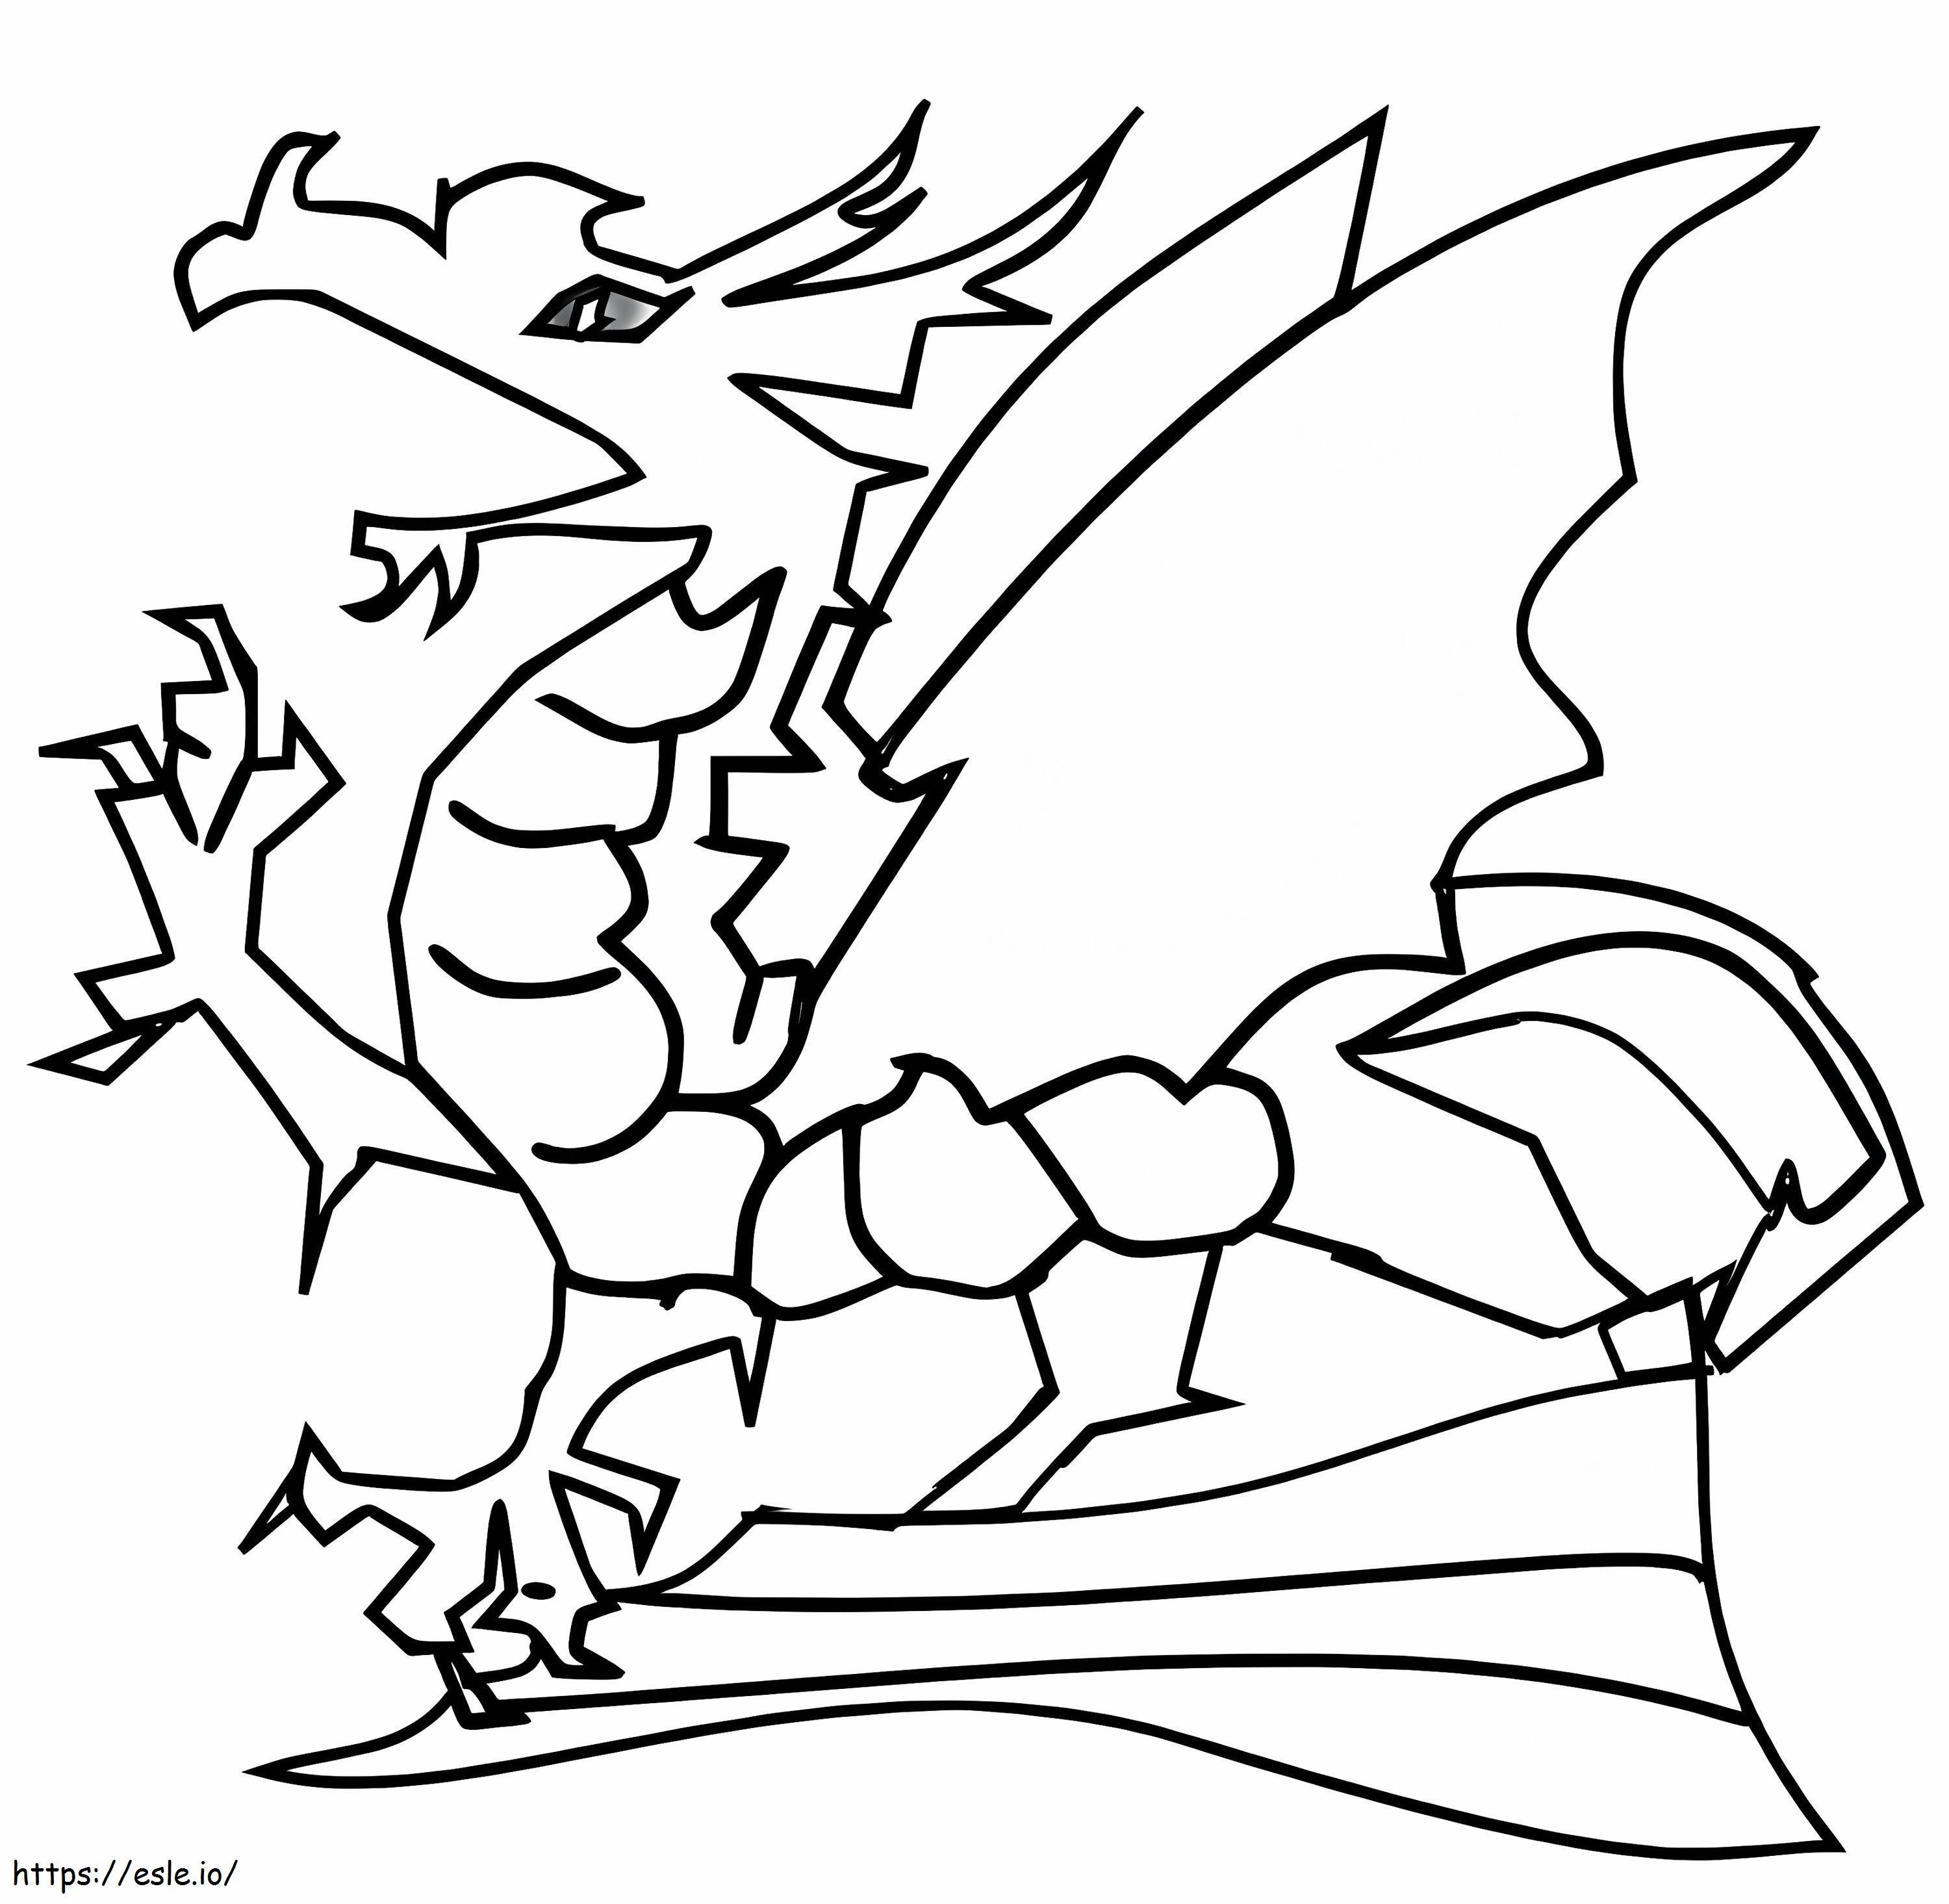 Easy Dragon coloring page